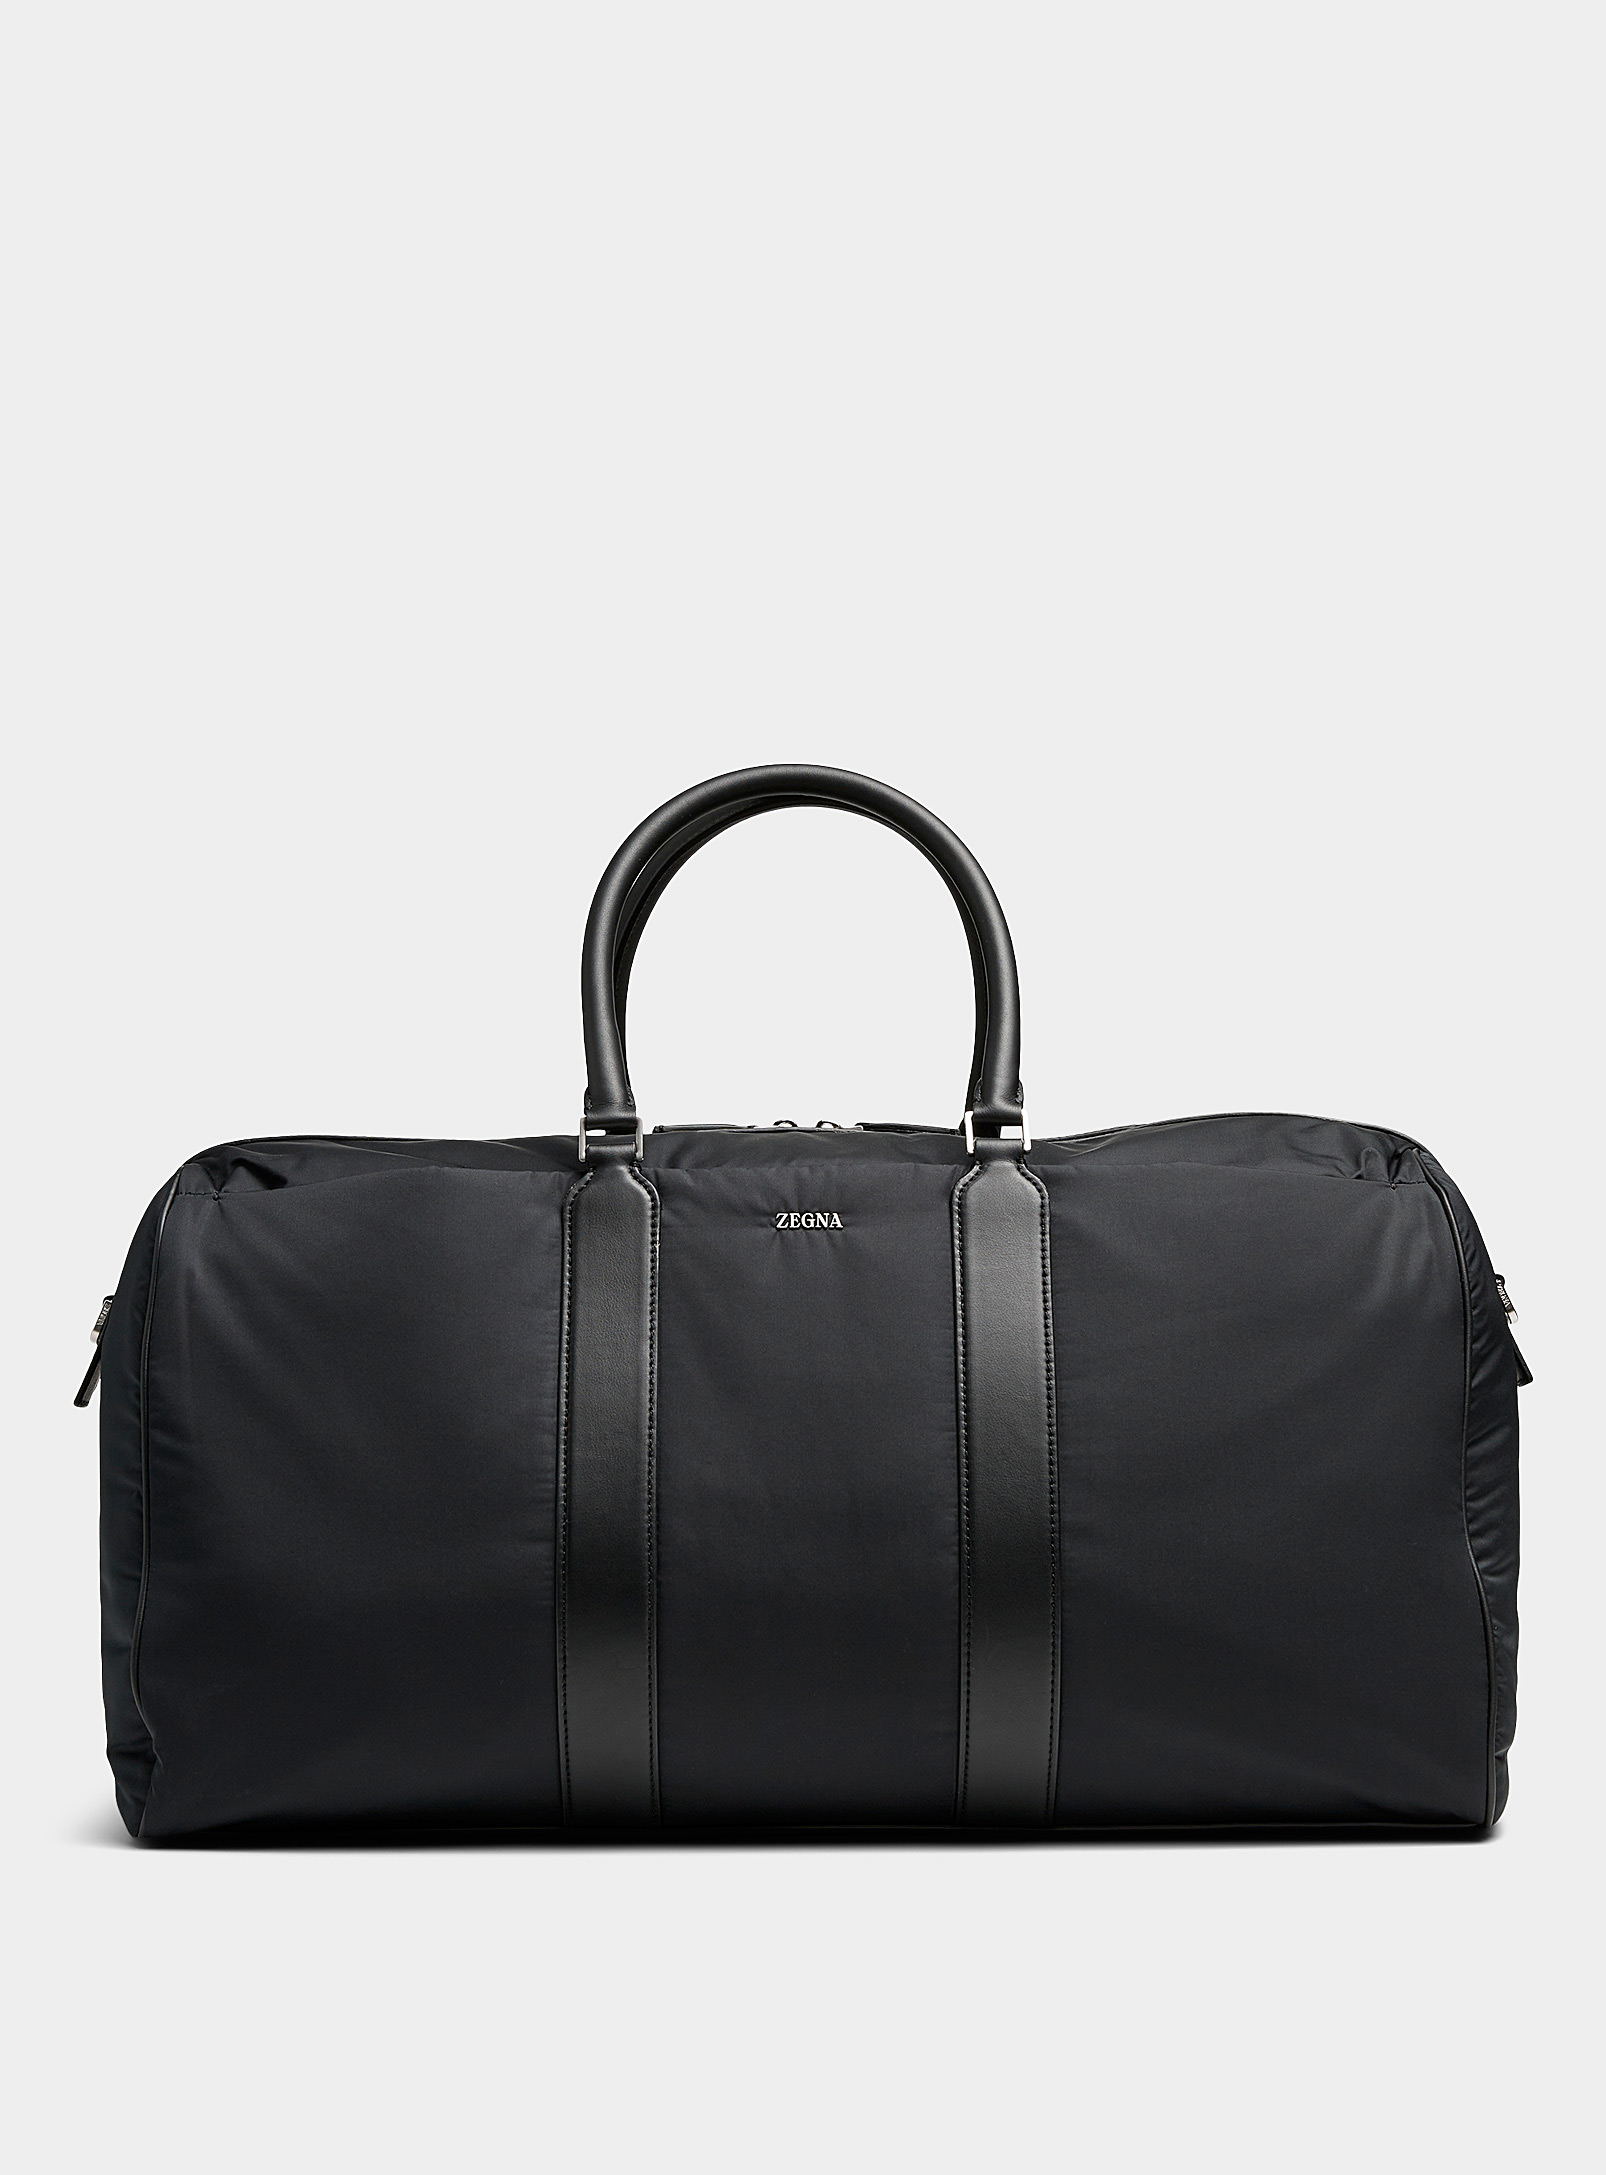 Zegna Holdall 55 Weekender Bag In Black